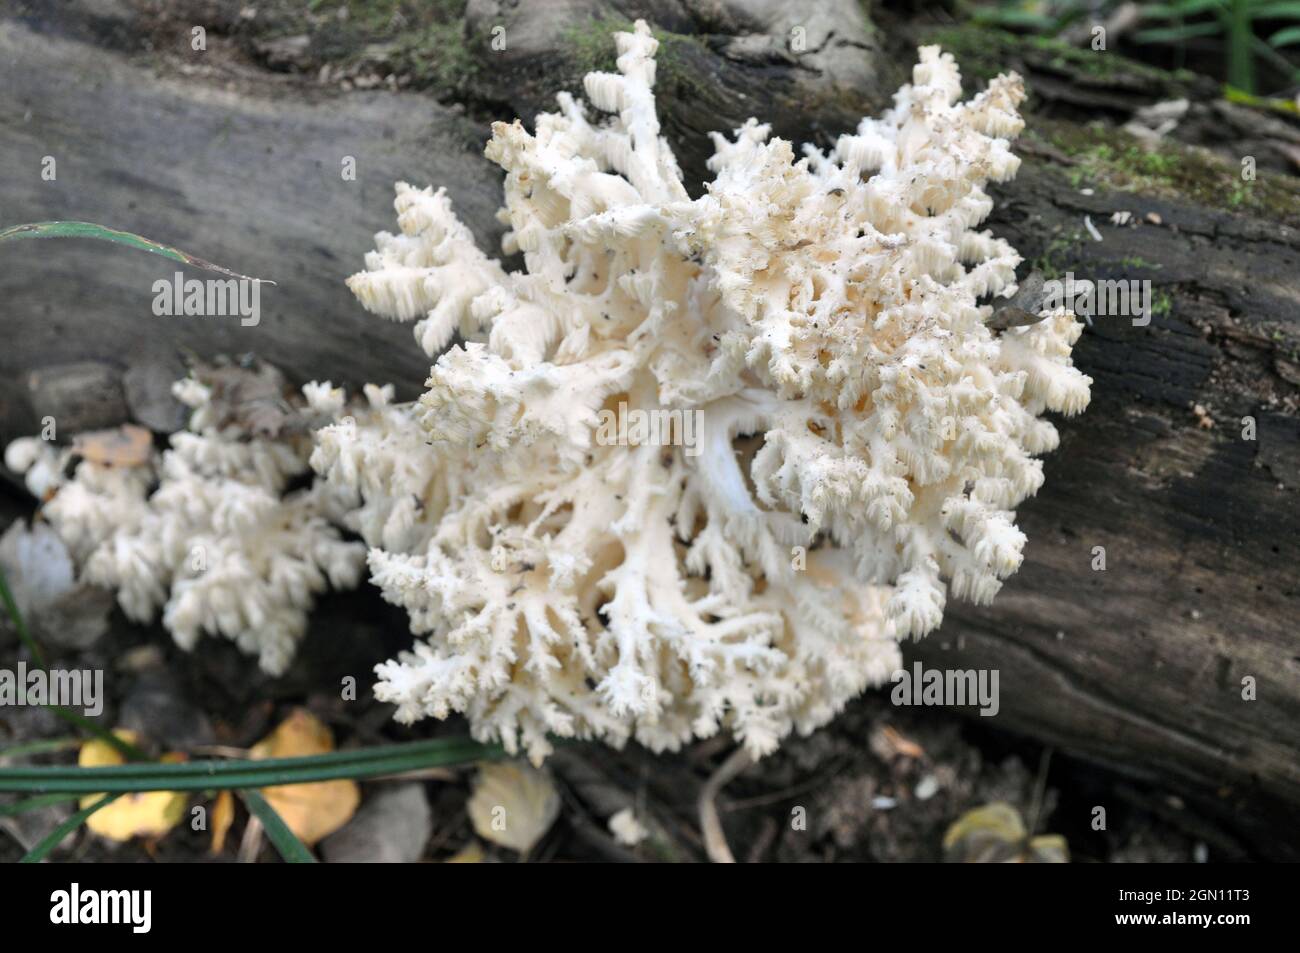 Hericium Hericium is an edible mushroom of the genus Hericium. Stock Photo